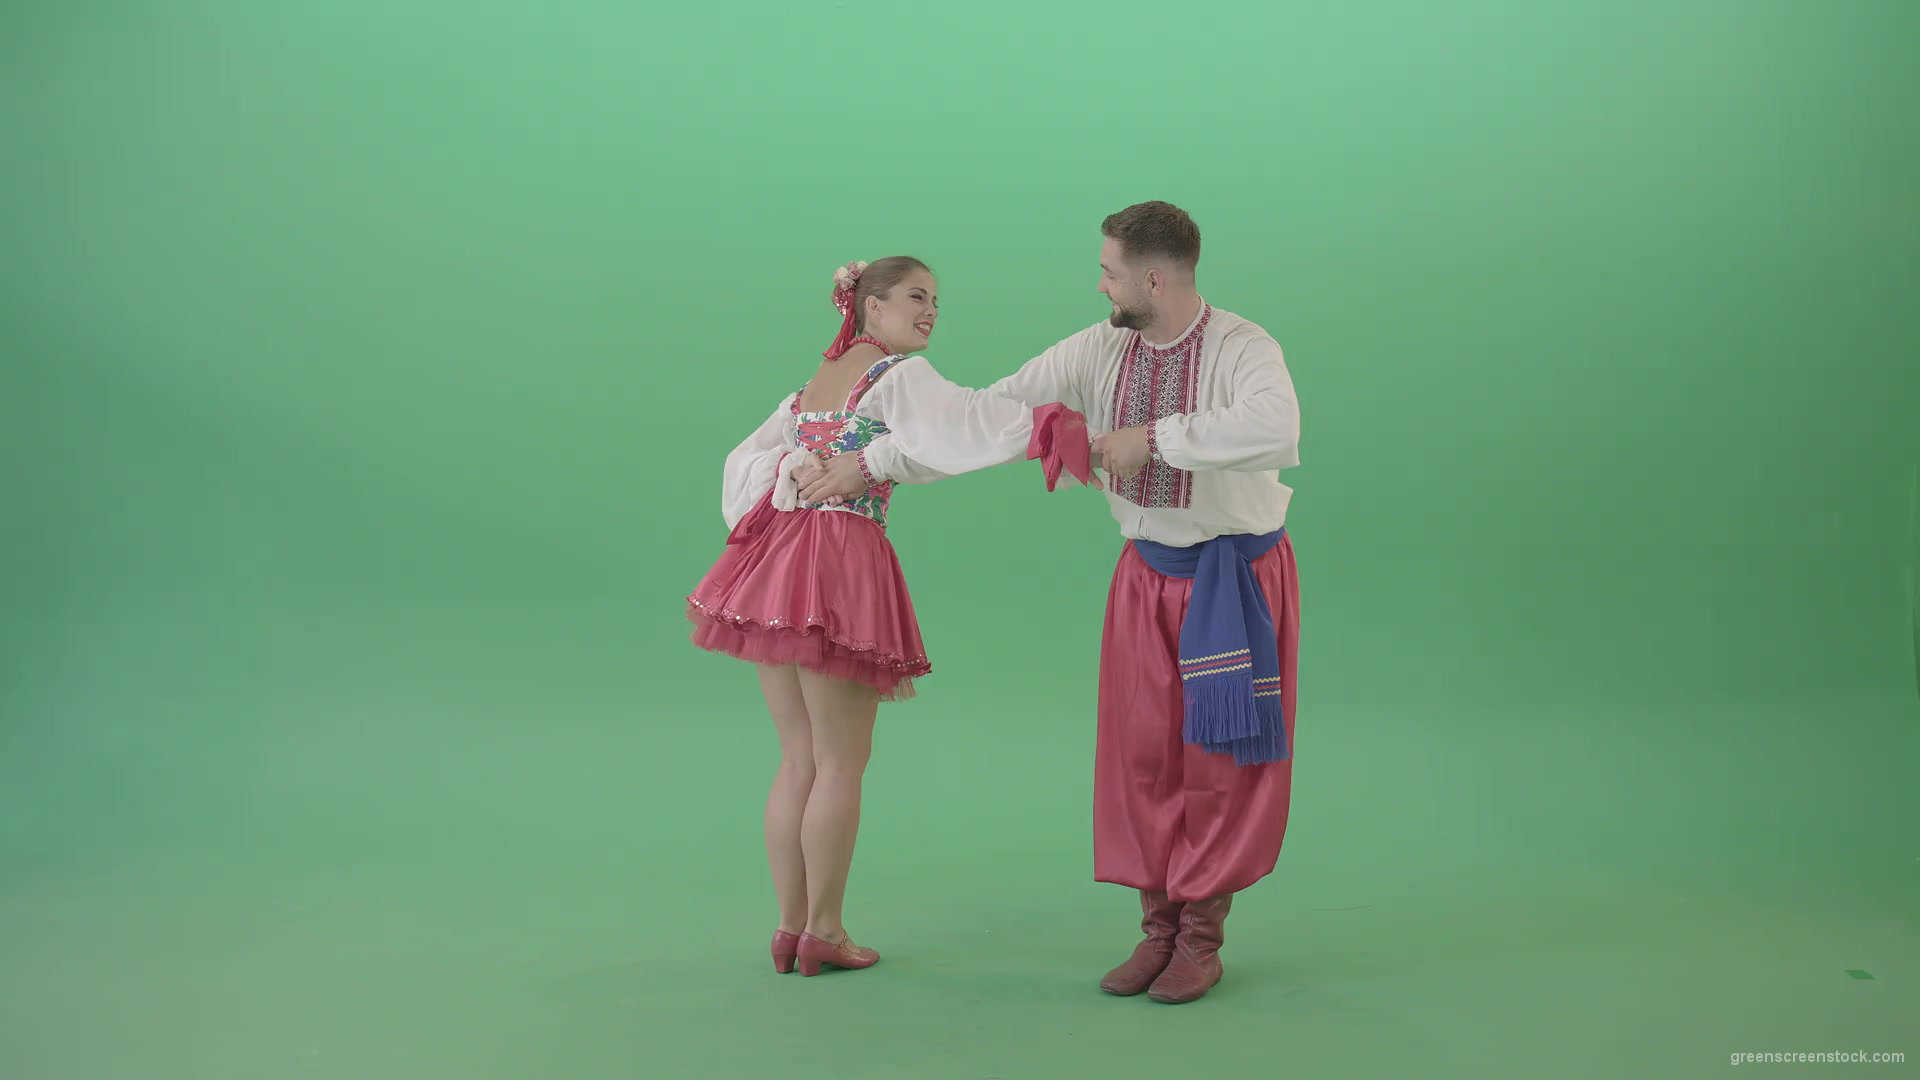 Folk-dance-Polka-in-Ukraine-national-dacing-couple-isolated-on-Green-Screen-4K-Video-Footage-1920_001 Green Screen Stock